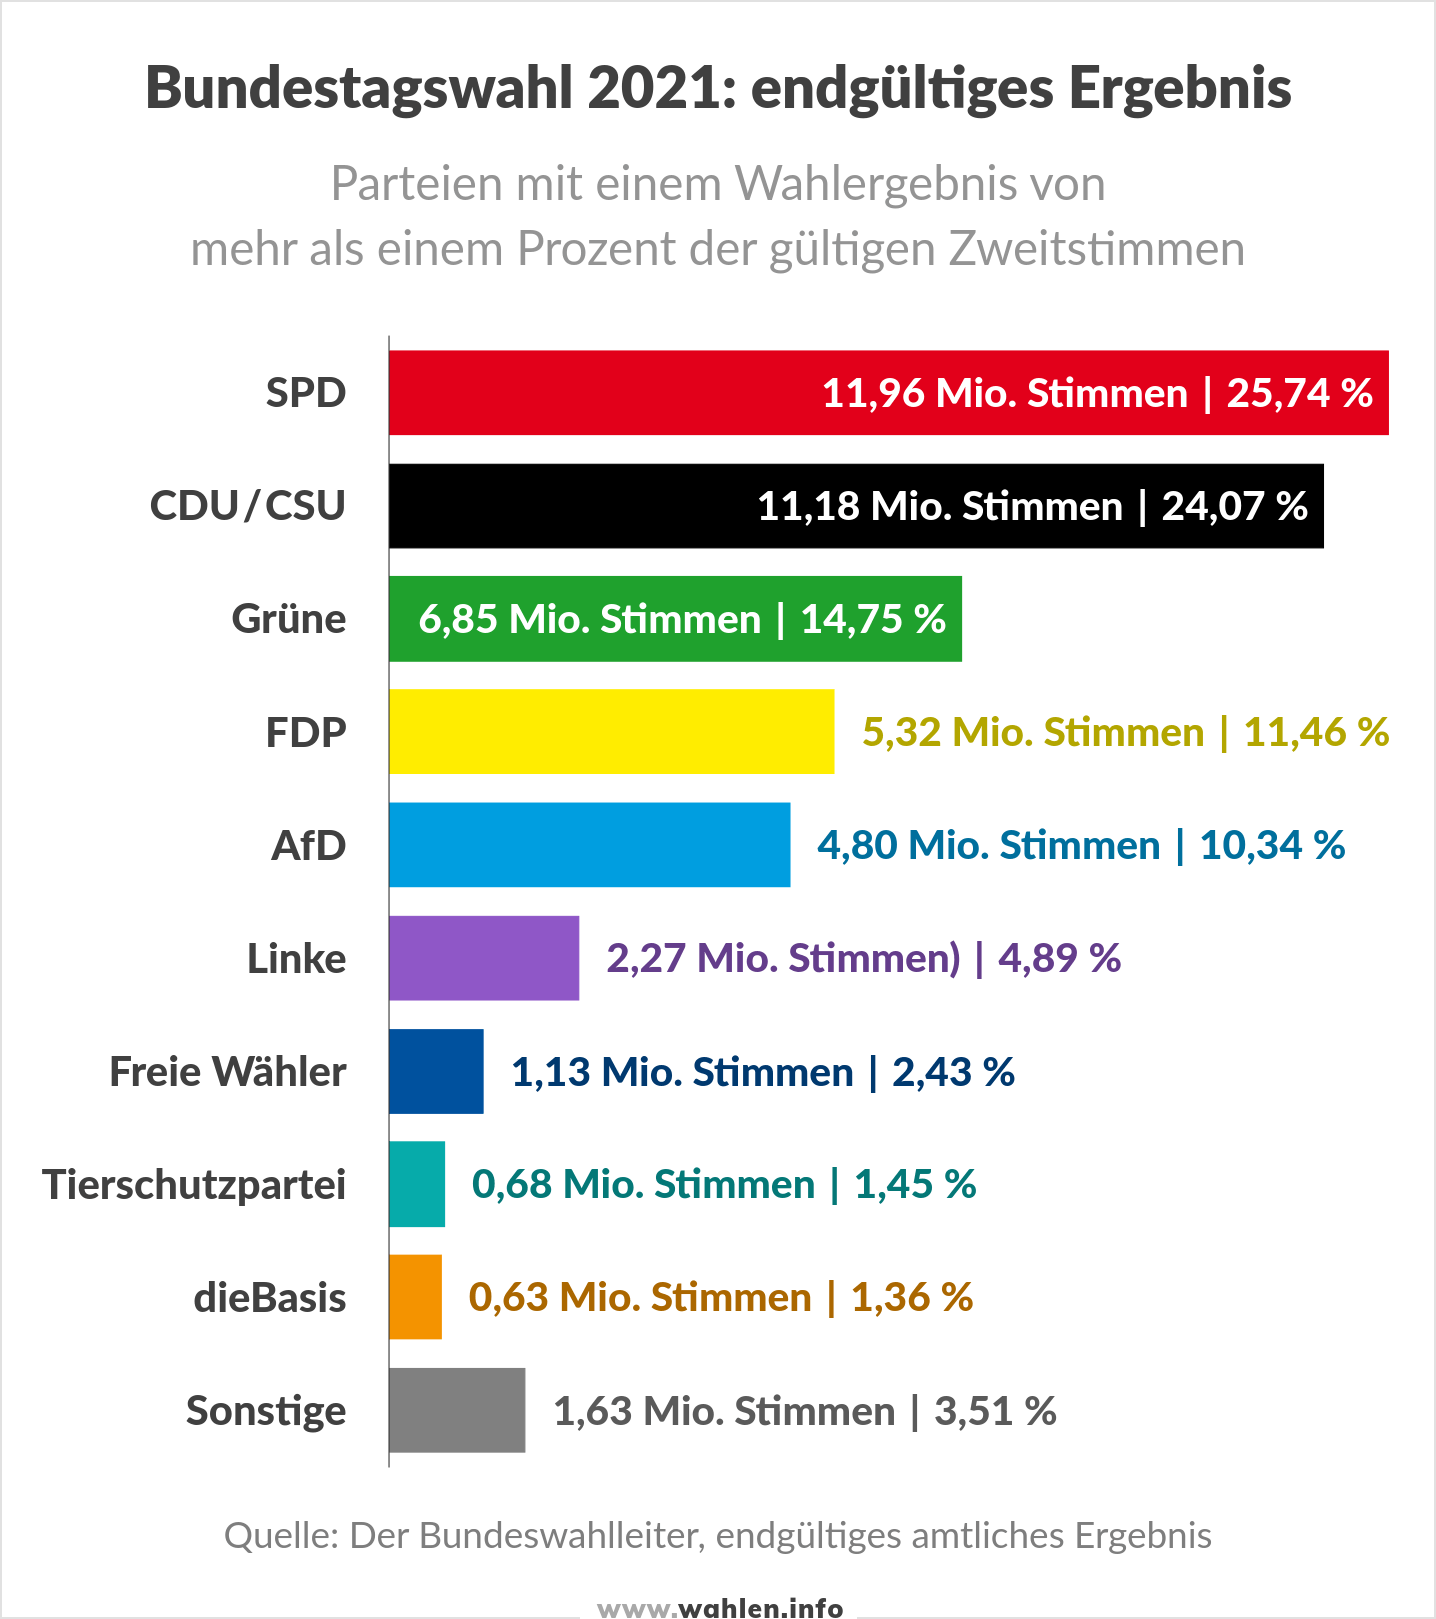 Ergebnis der Bundestagswahl 2021 (Endgültiges Wahlergebnis)